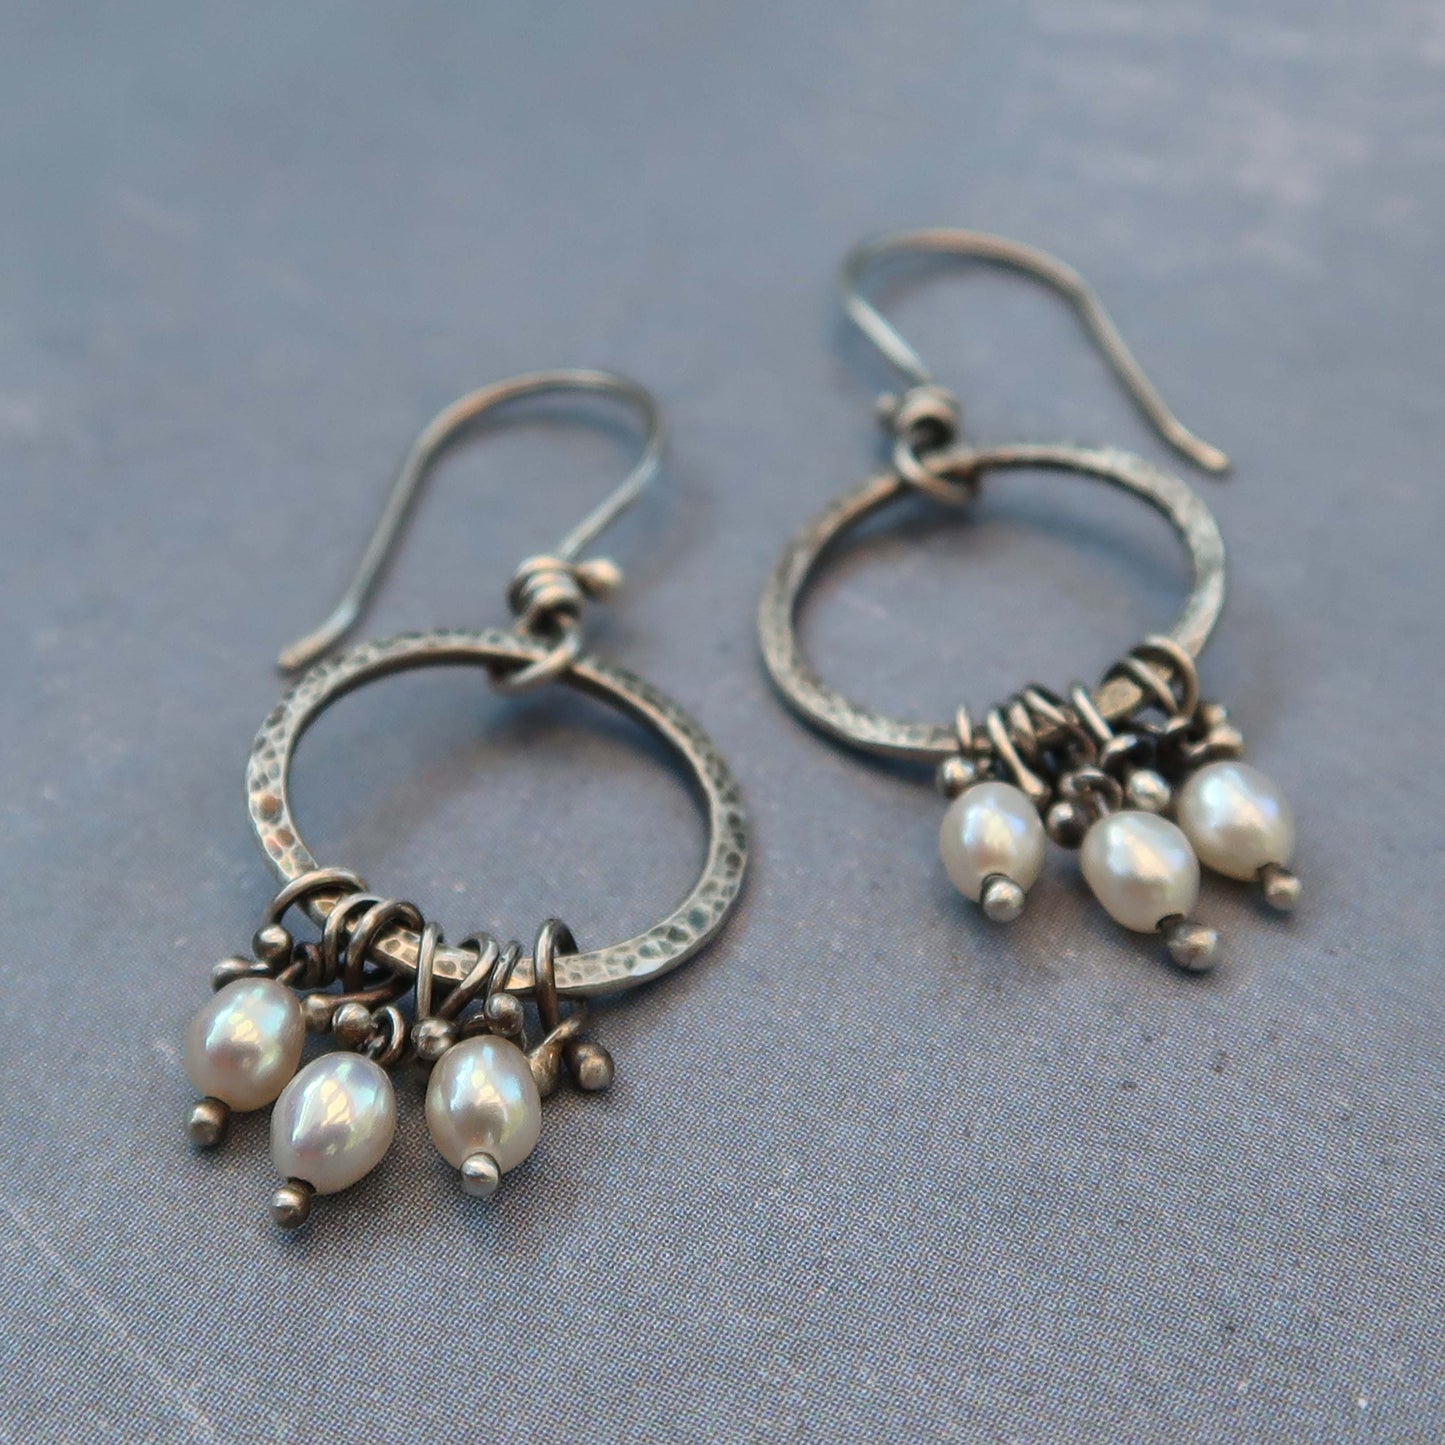 Unique artisan earrings